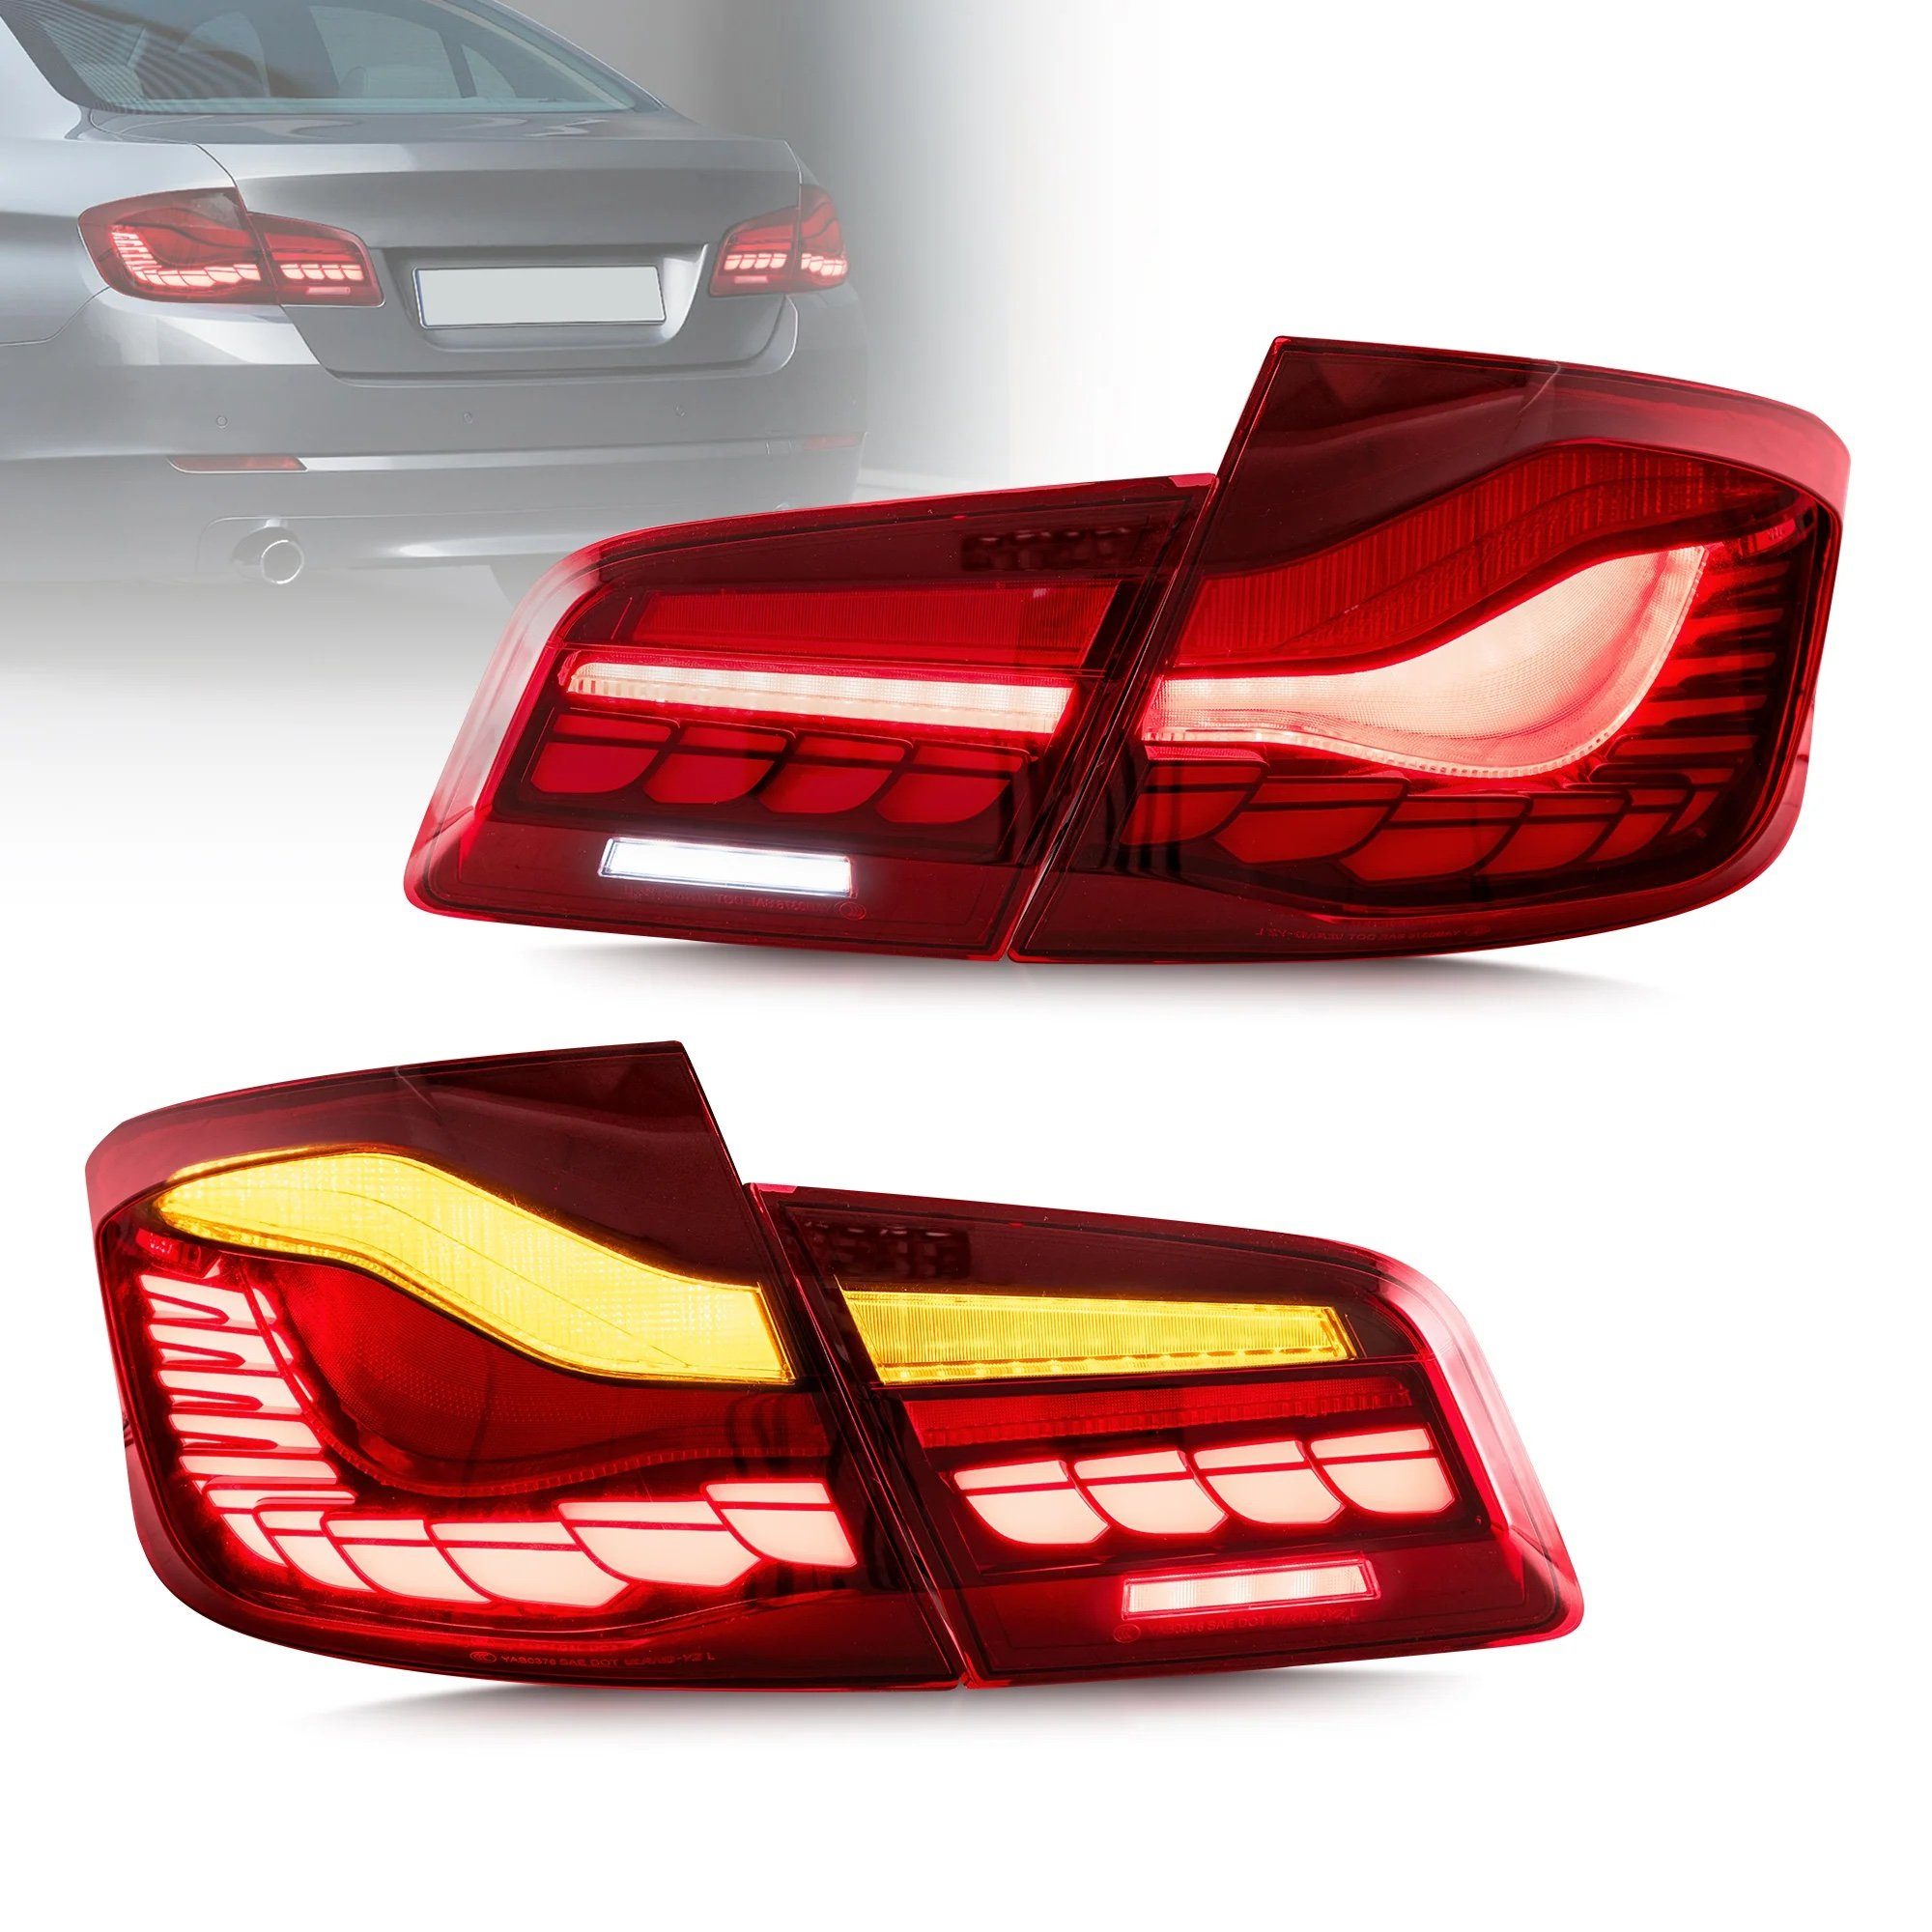 LLCTOOLS Rückleuchte Voll LED Rückleuchten für BMW F10 Limousine 2010-Rot in OLED Technik, LED fest integriert | Autolampen